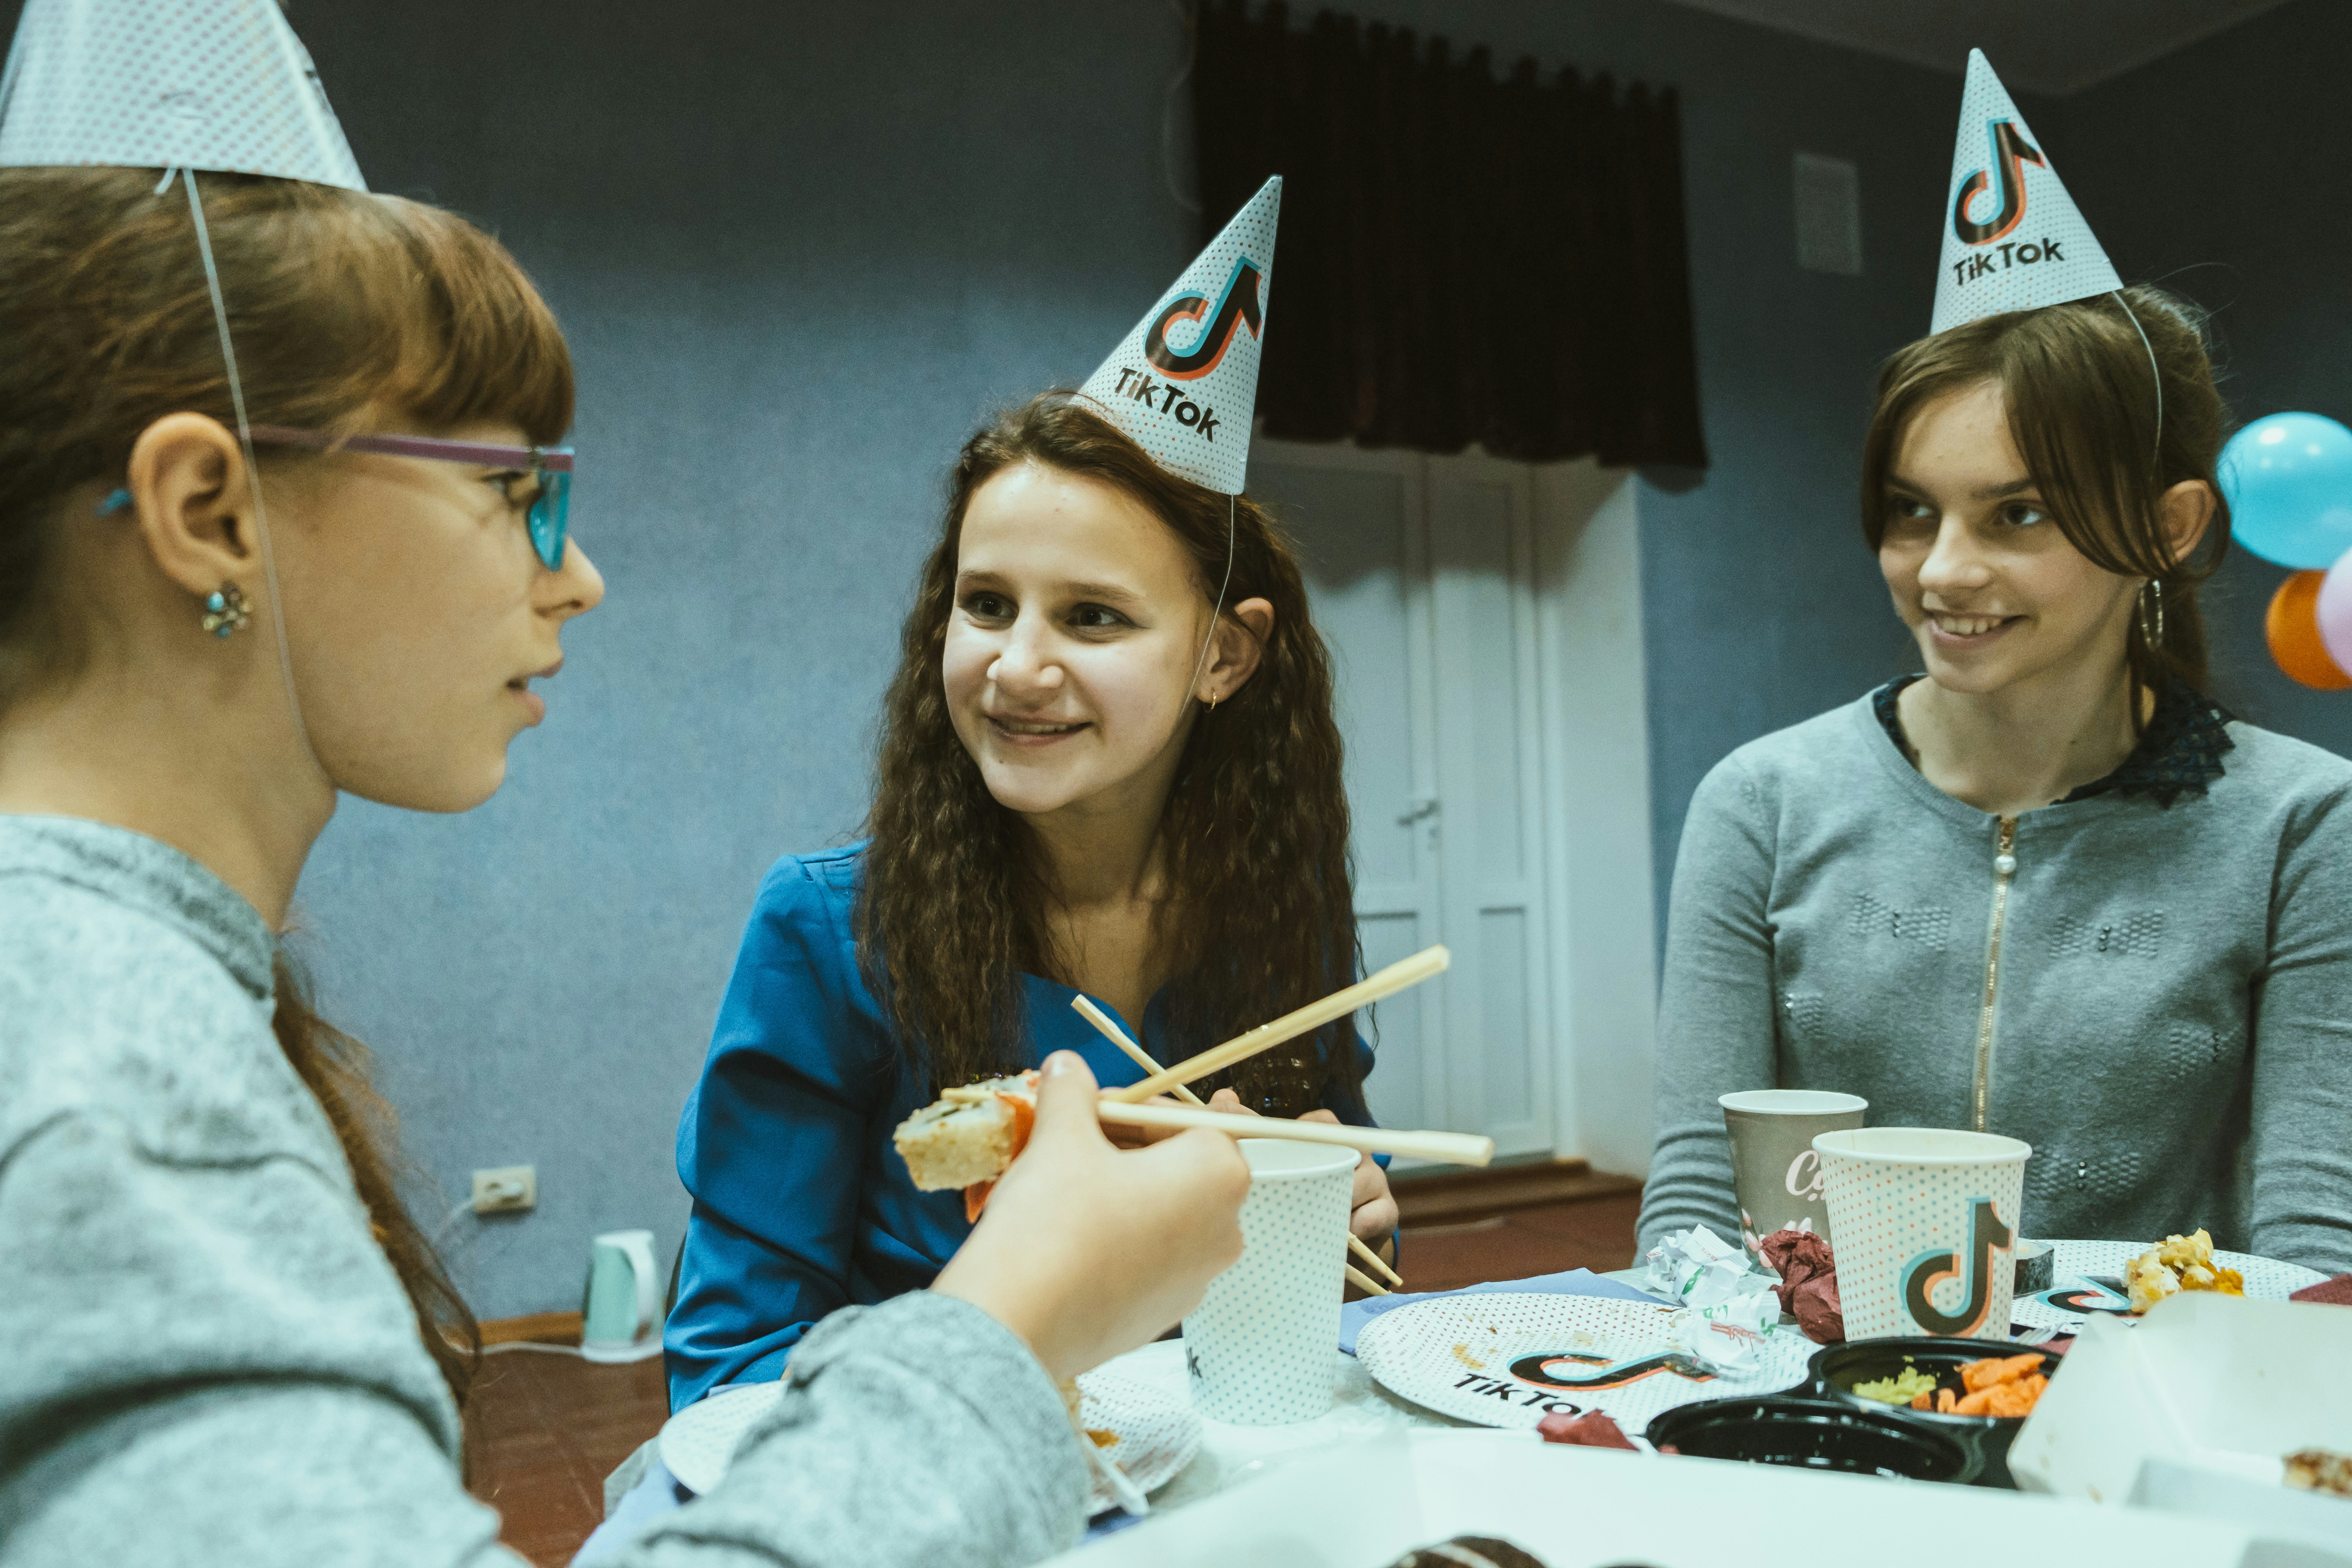 Kids Celebration Party, tik tok hats adn eat sushi